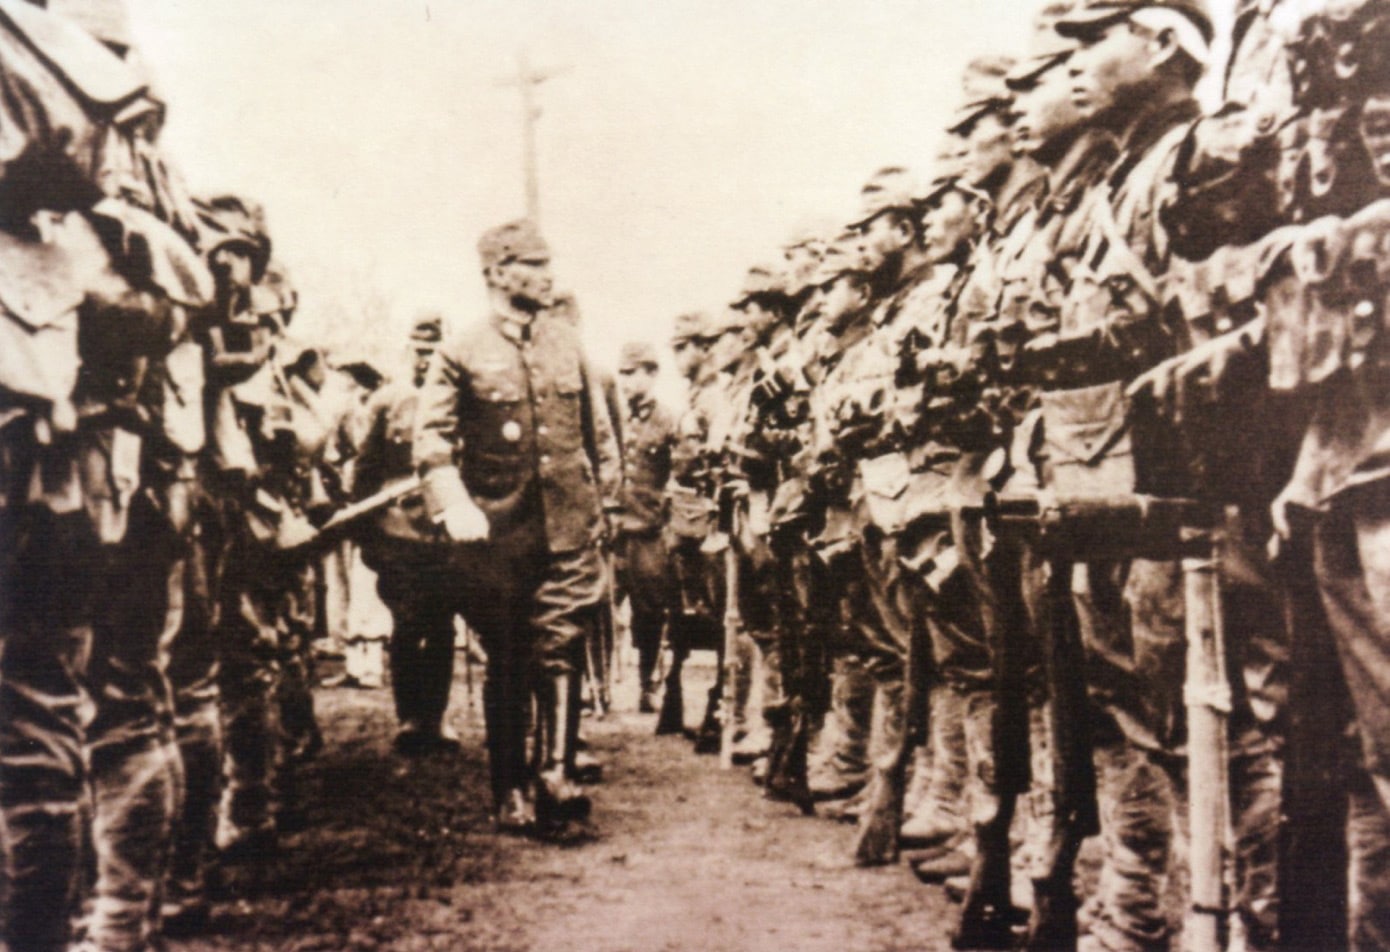 giretsu commandos inspection prior to the raid on yontan field in okinawa